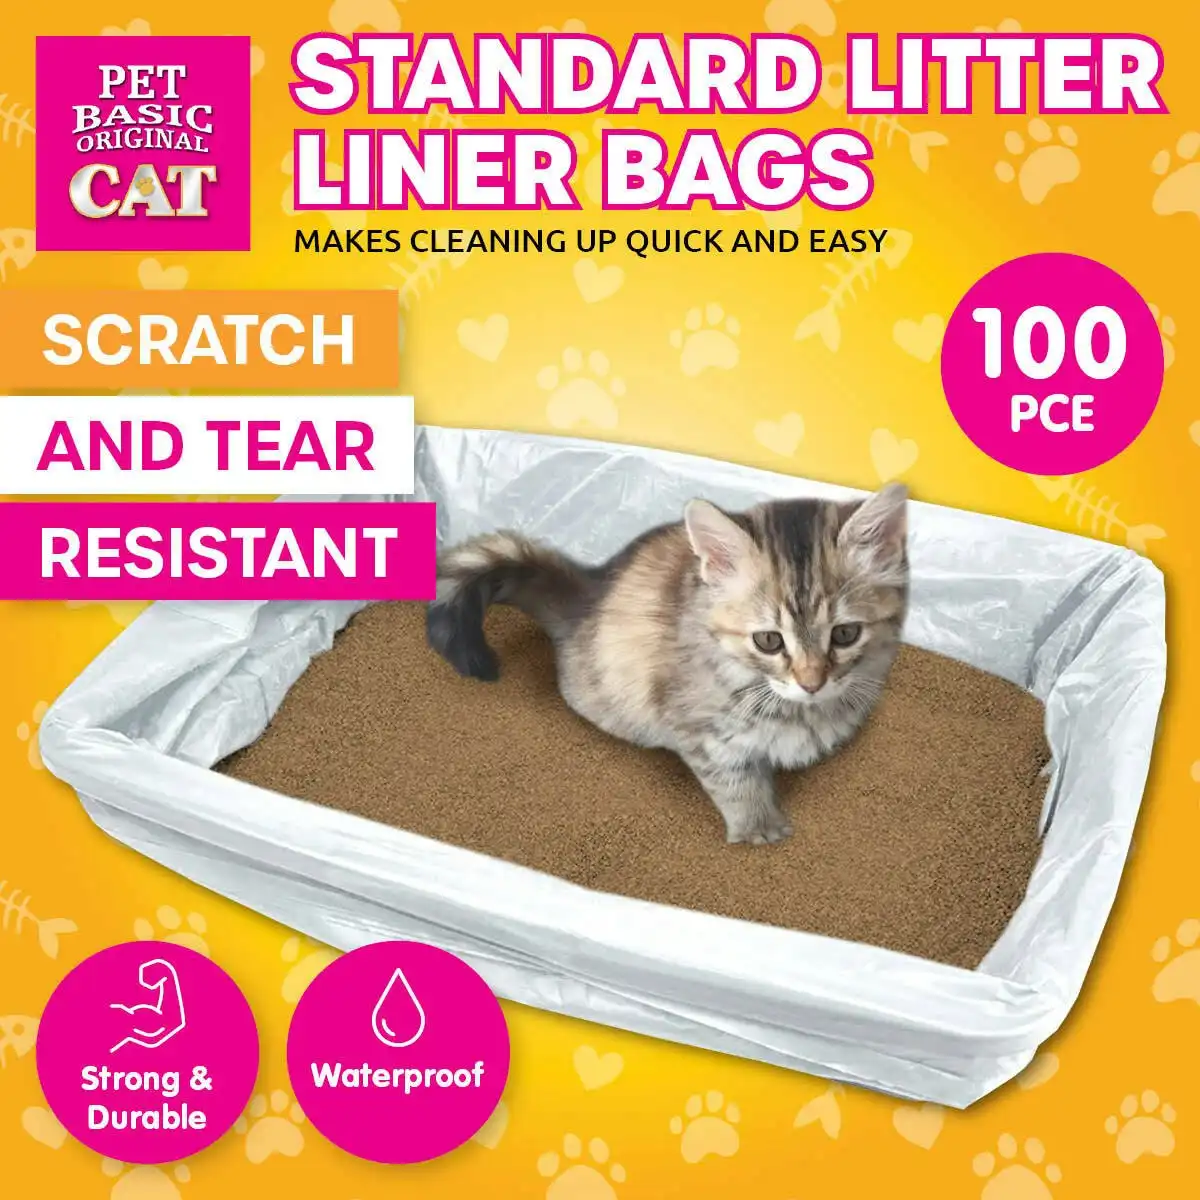 Pet Basic 100PCE Standard Litter Liner Bags Scratch/Tear Resistant Strong 81 x 36cm